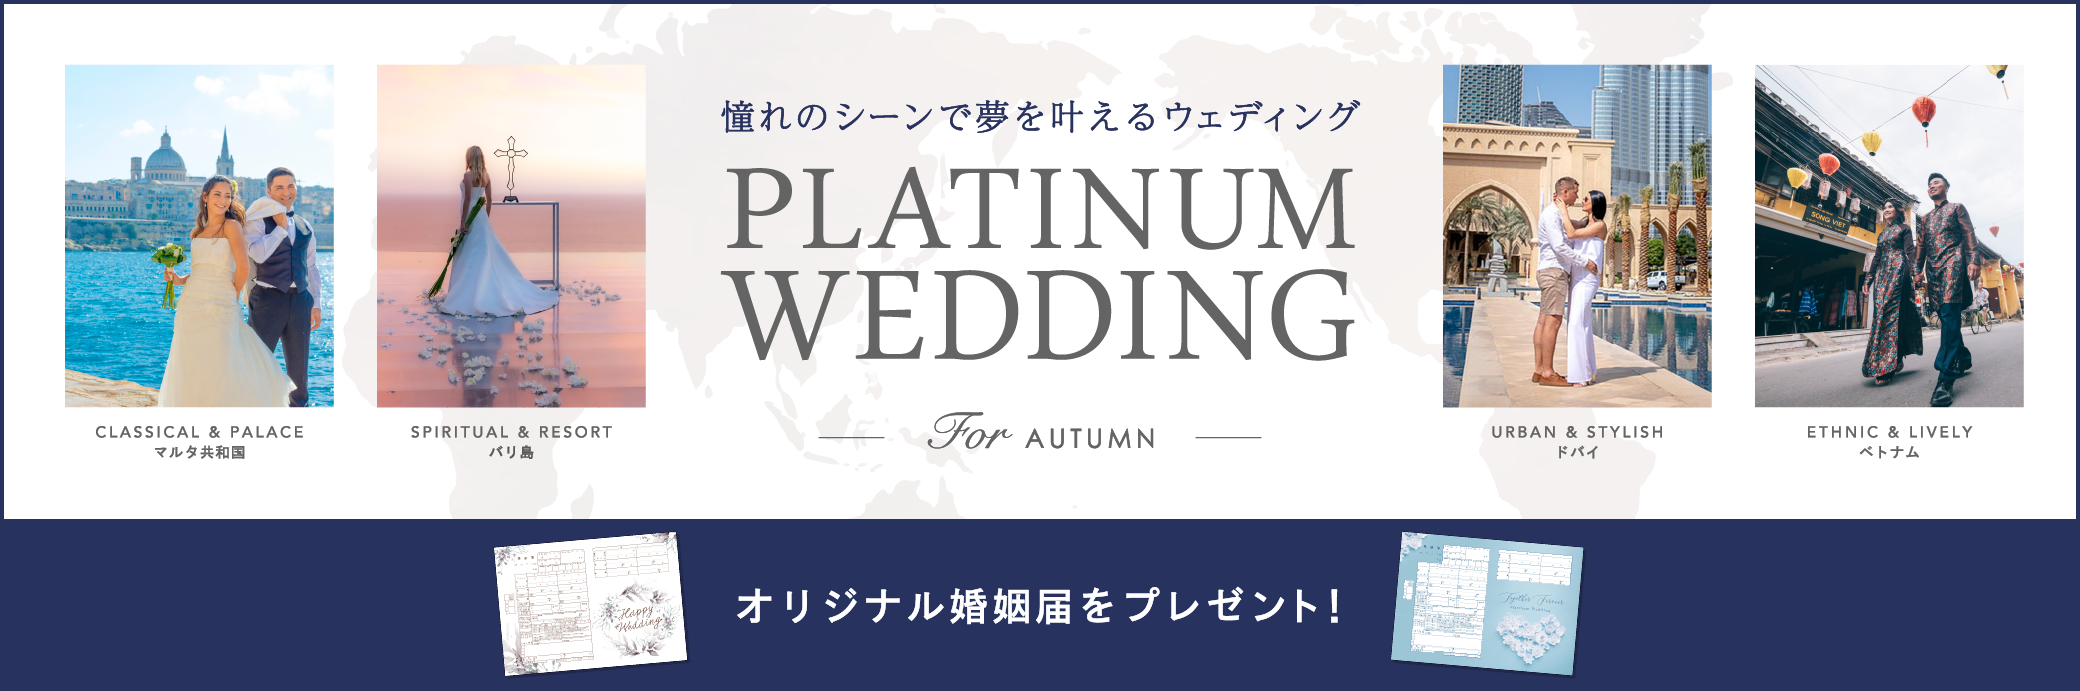 PLATINUM WEDDING